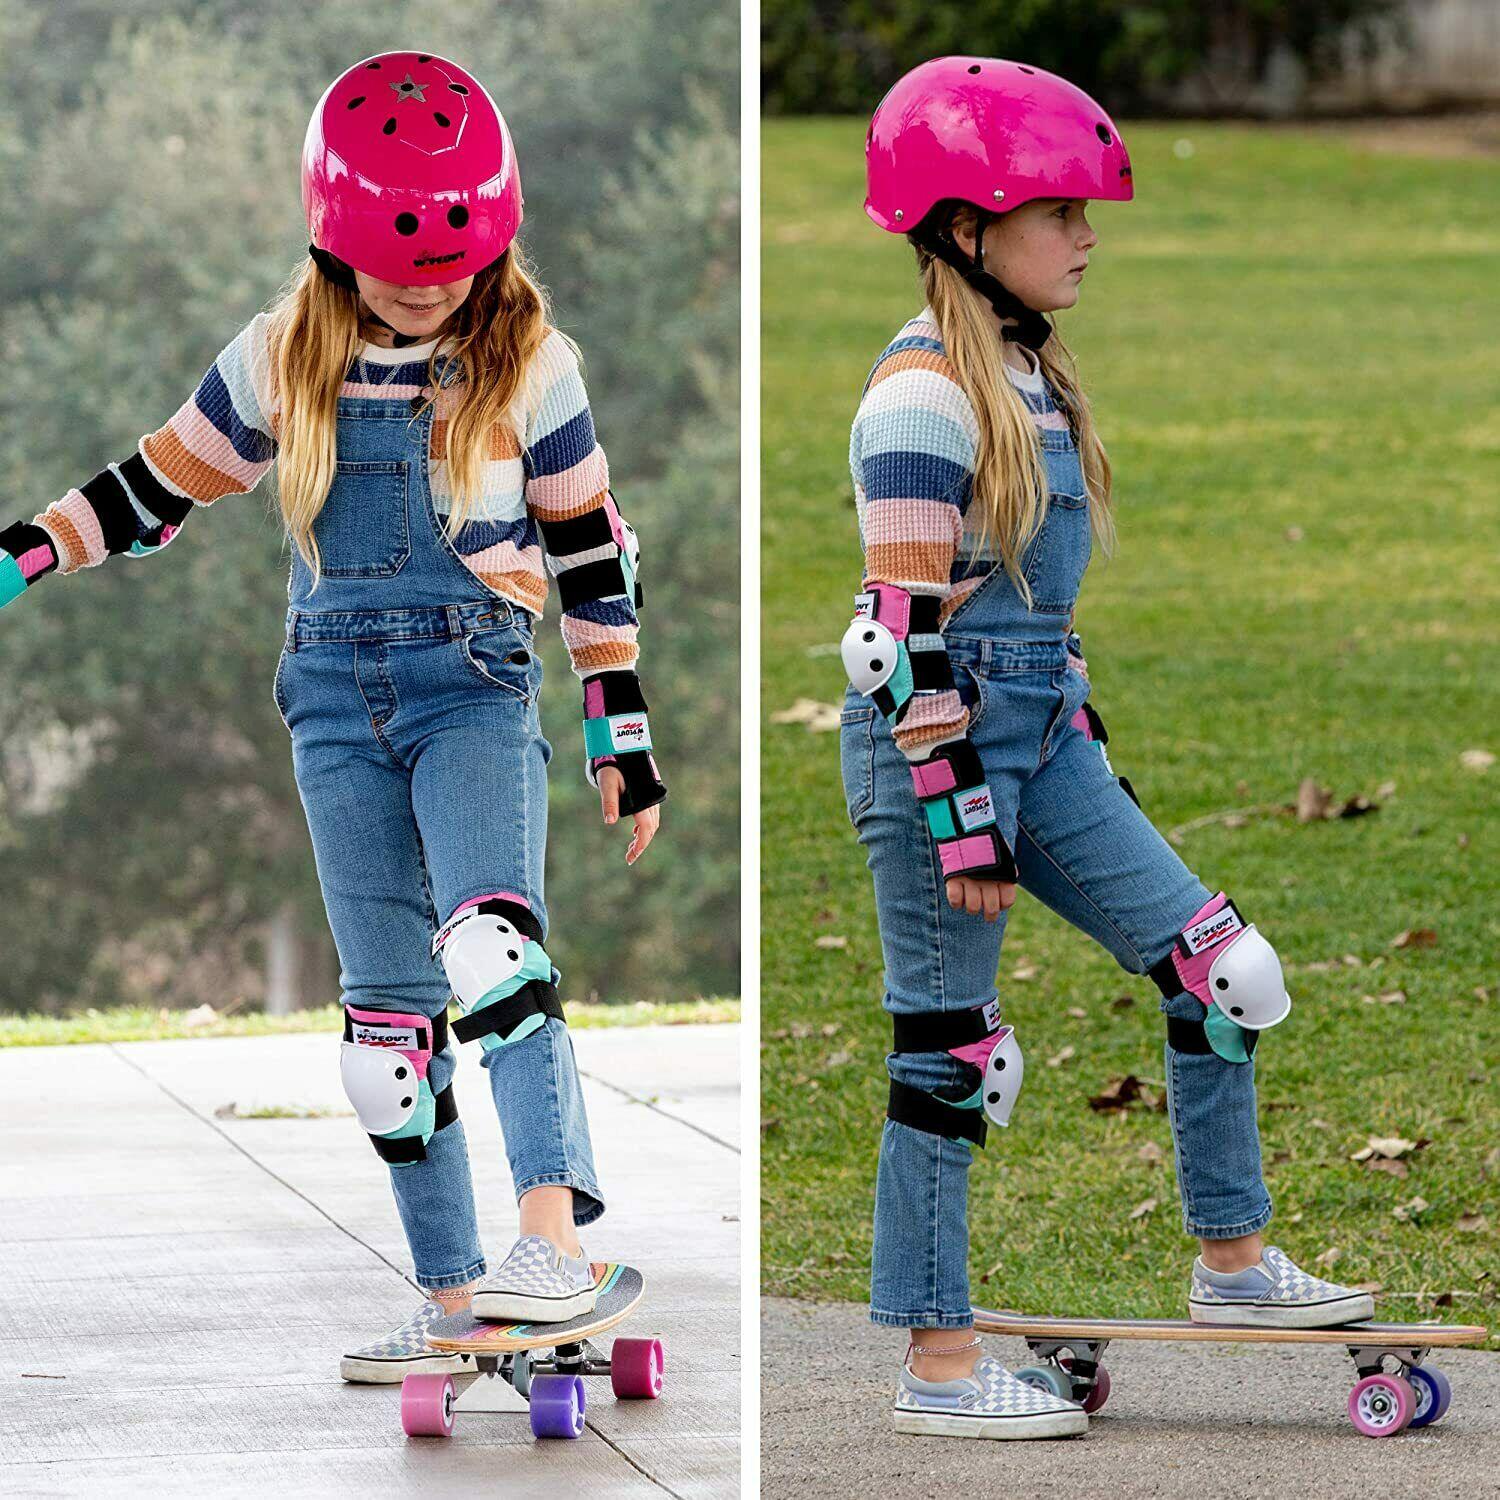 Wipeout Kids Bike Scooter Skate Helmet - Create own designs - Pink 5+ 4/5